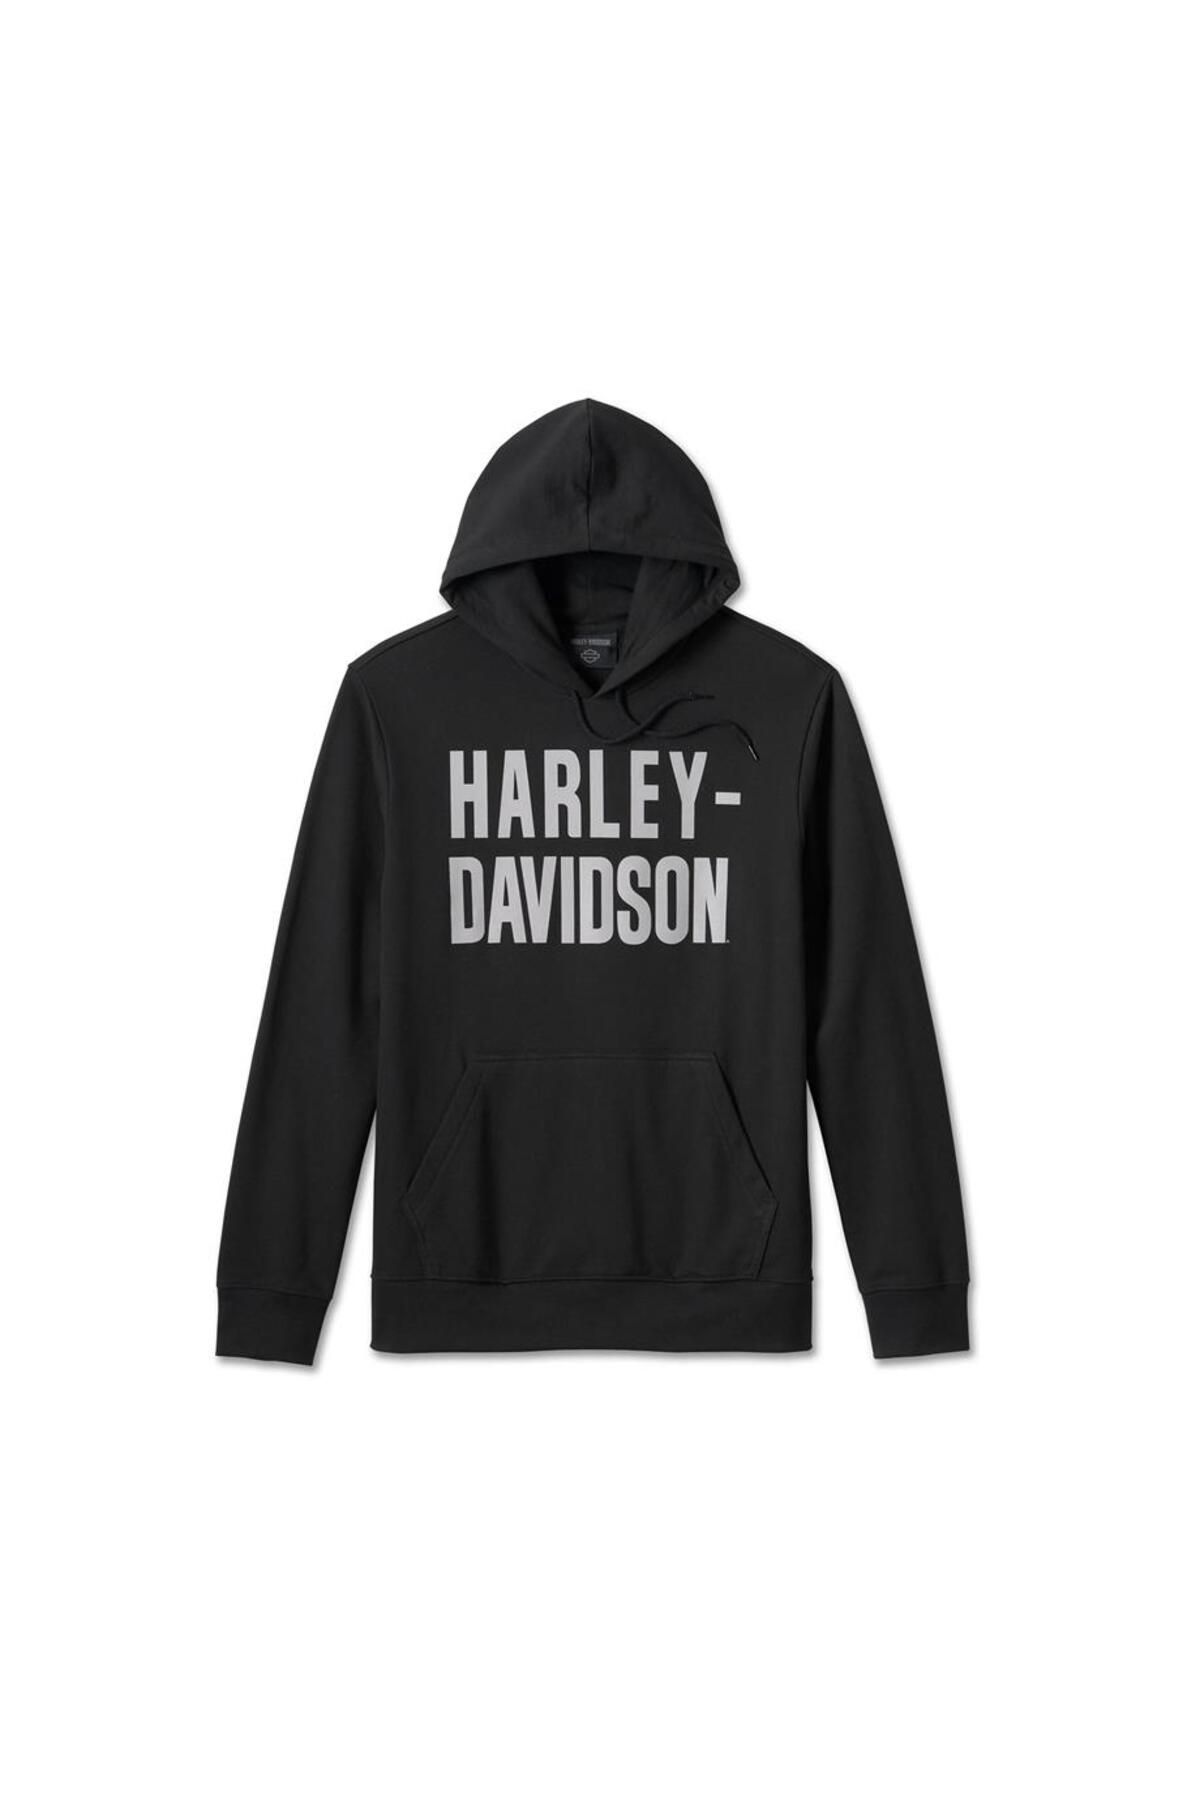 Harley Davidson Harley-Davidson Men's Foundation Hoodie - Black Beauty